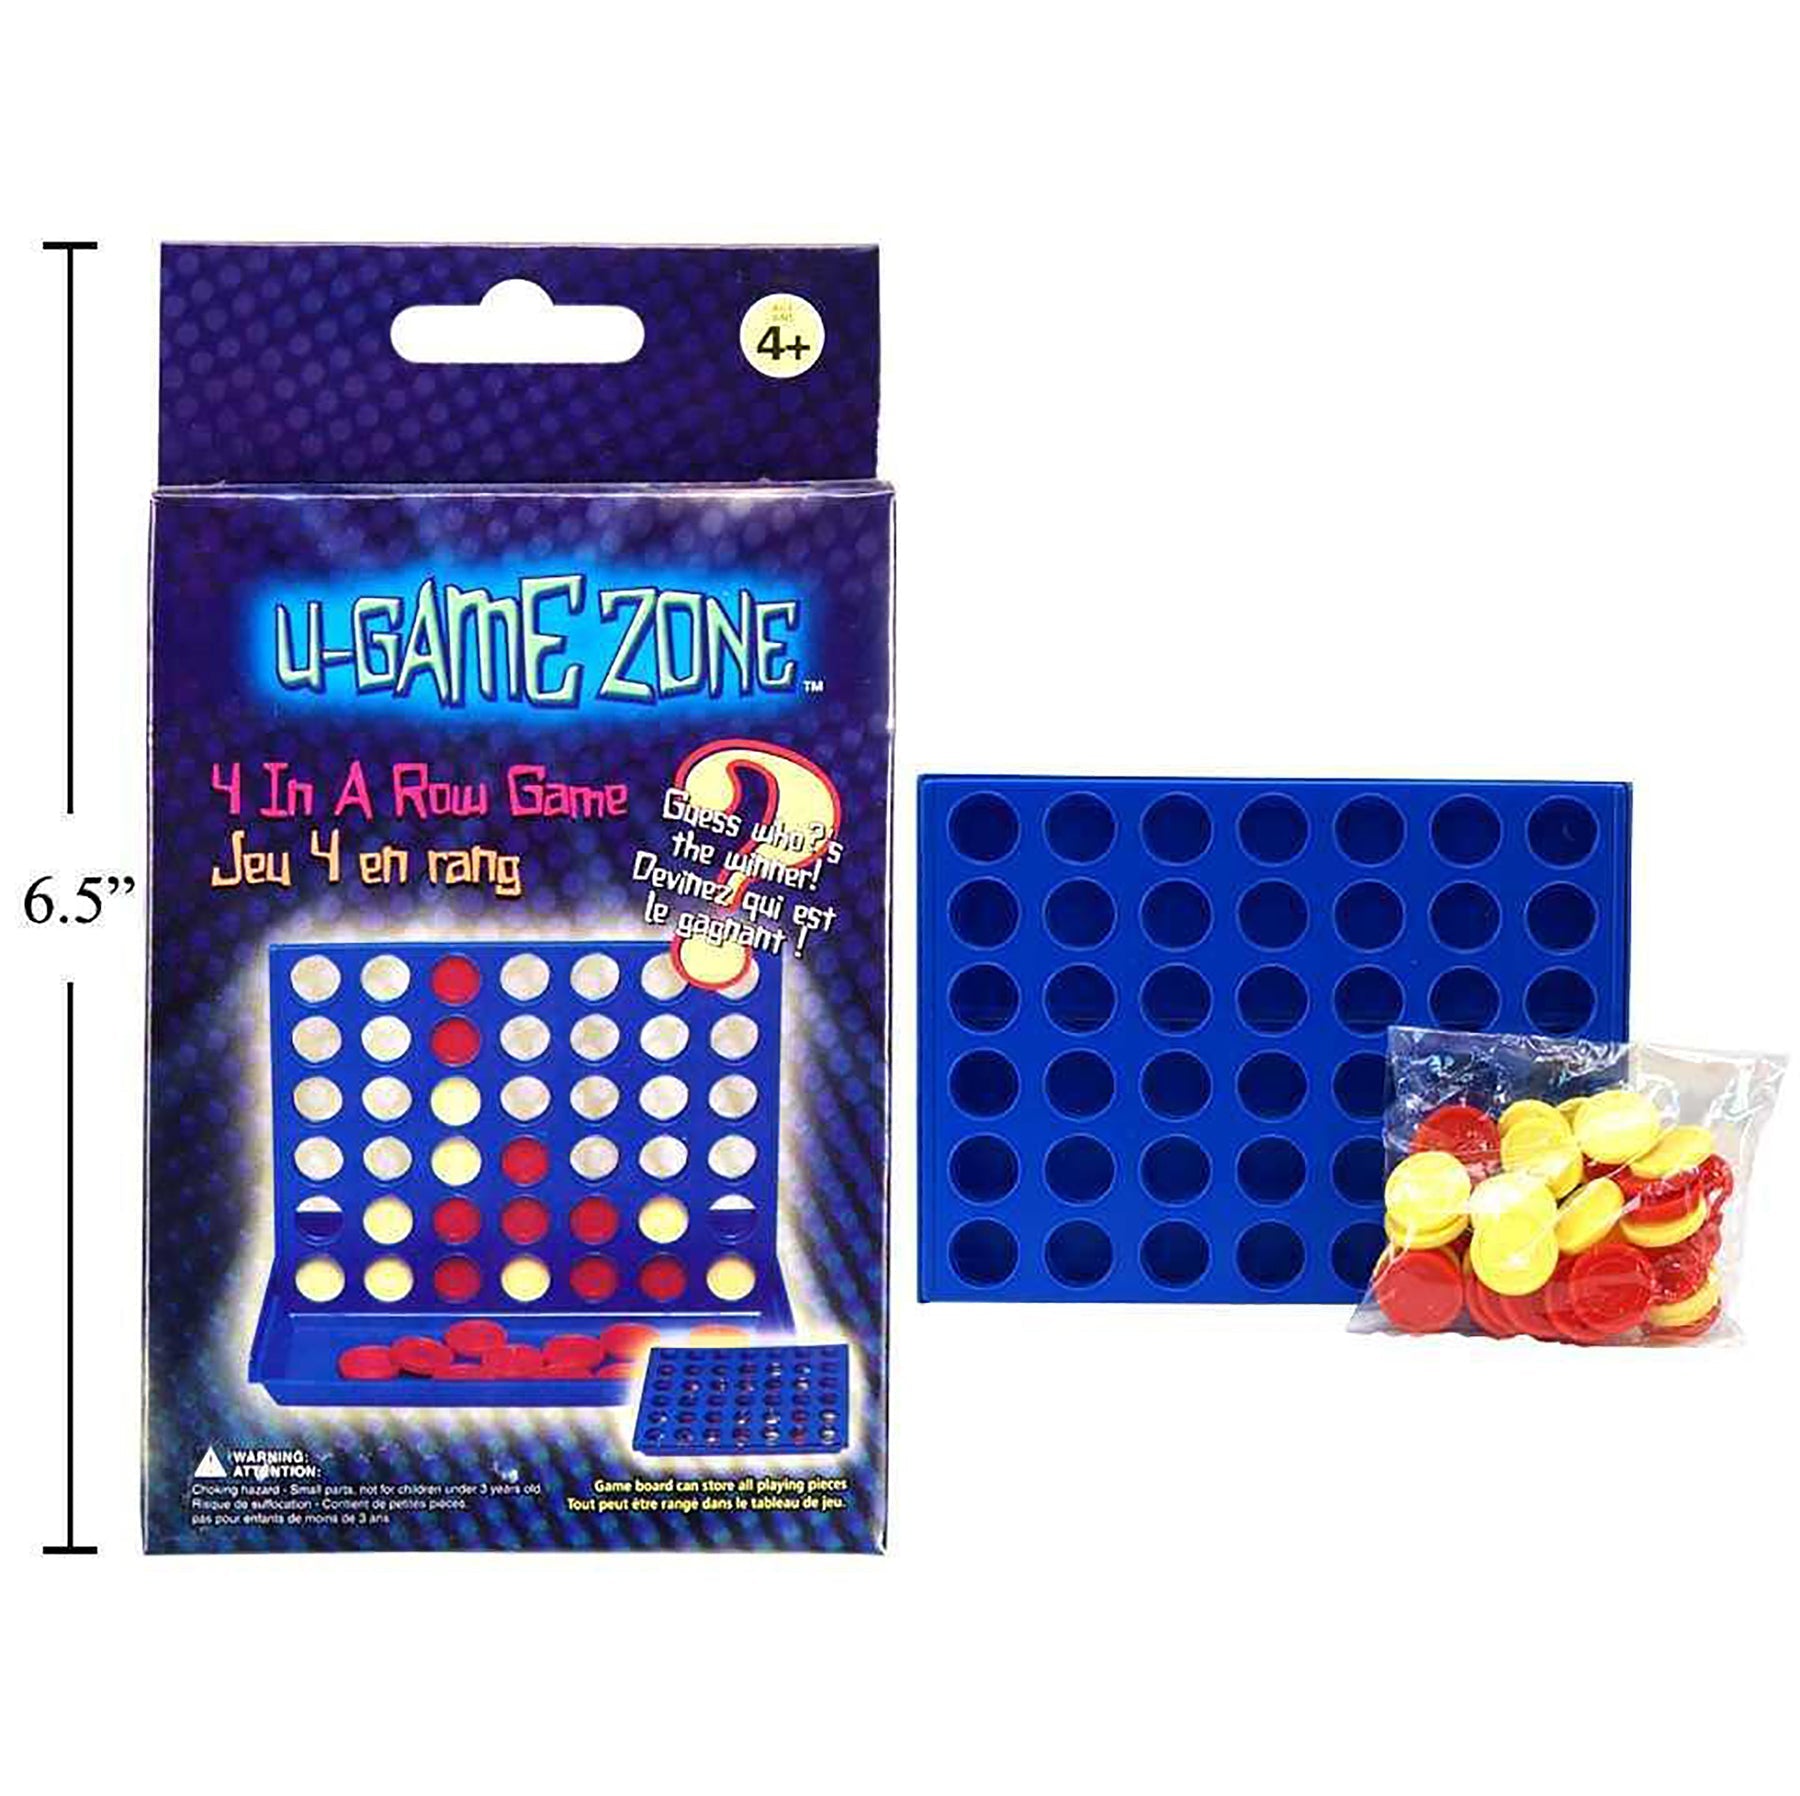 U-Game Zone 4-In-A-Row Game Plastic 3.75x5.25in Box